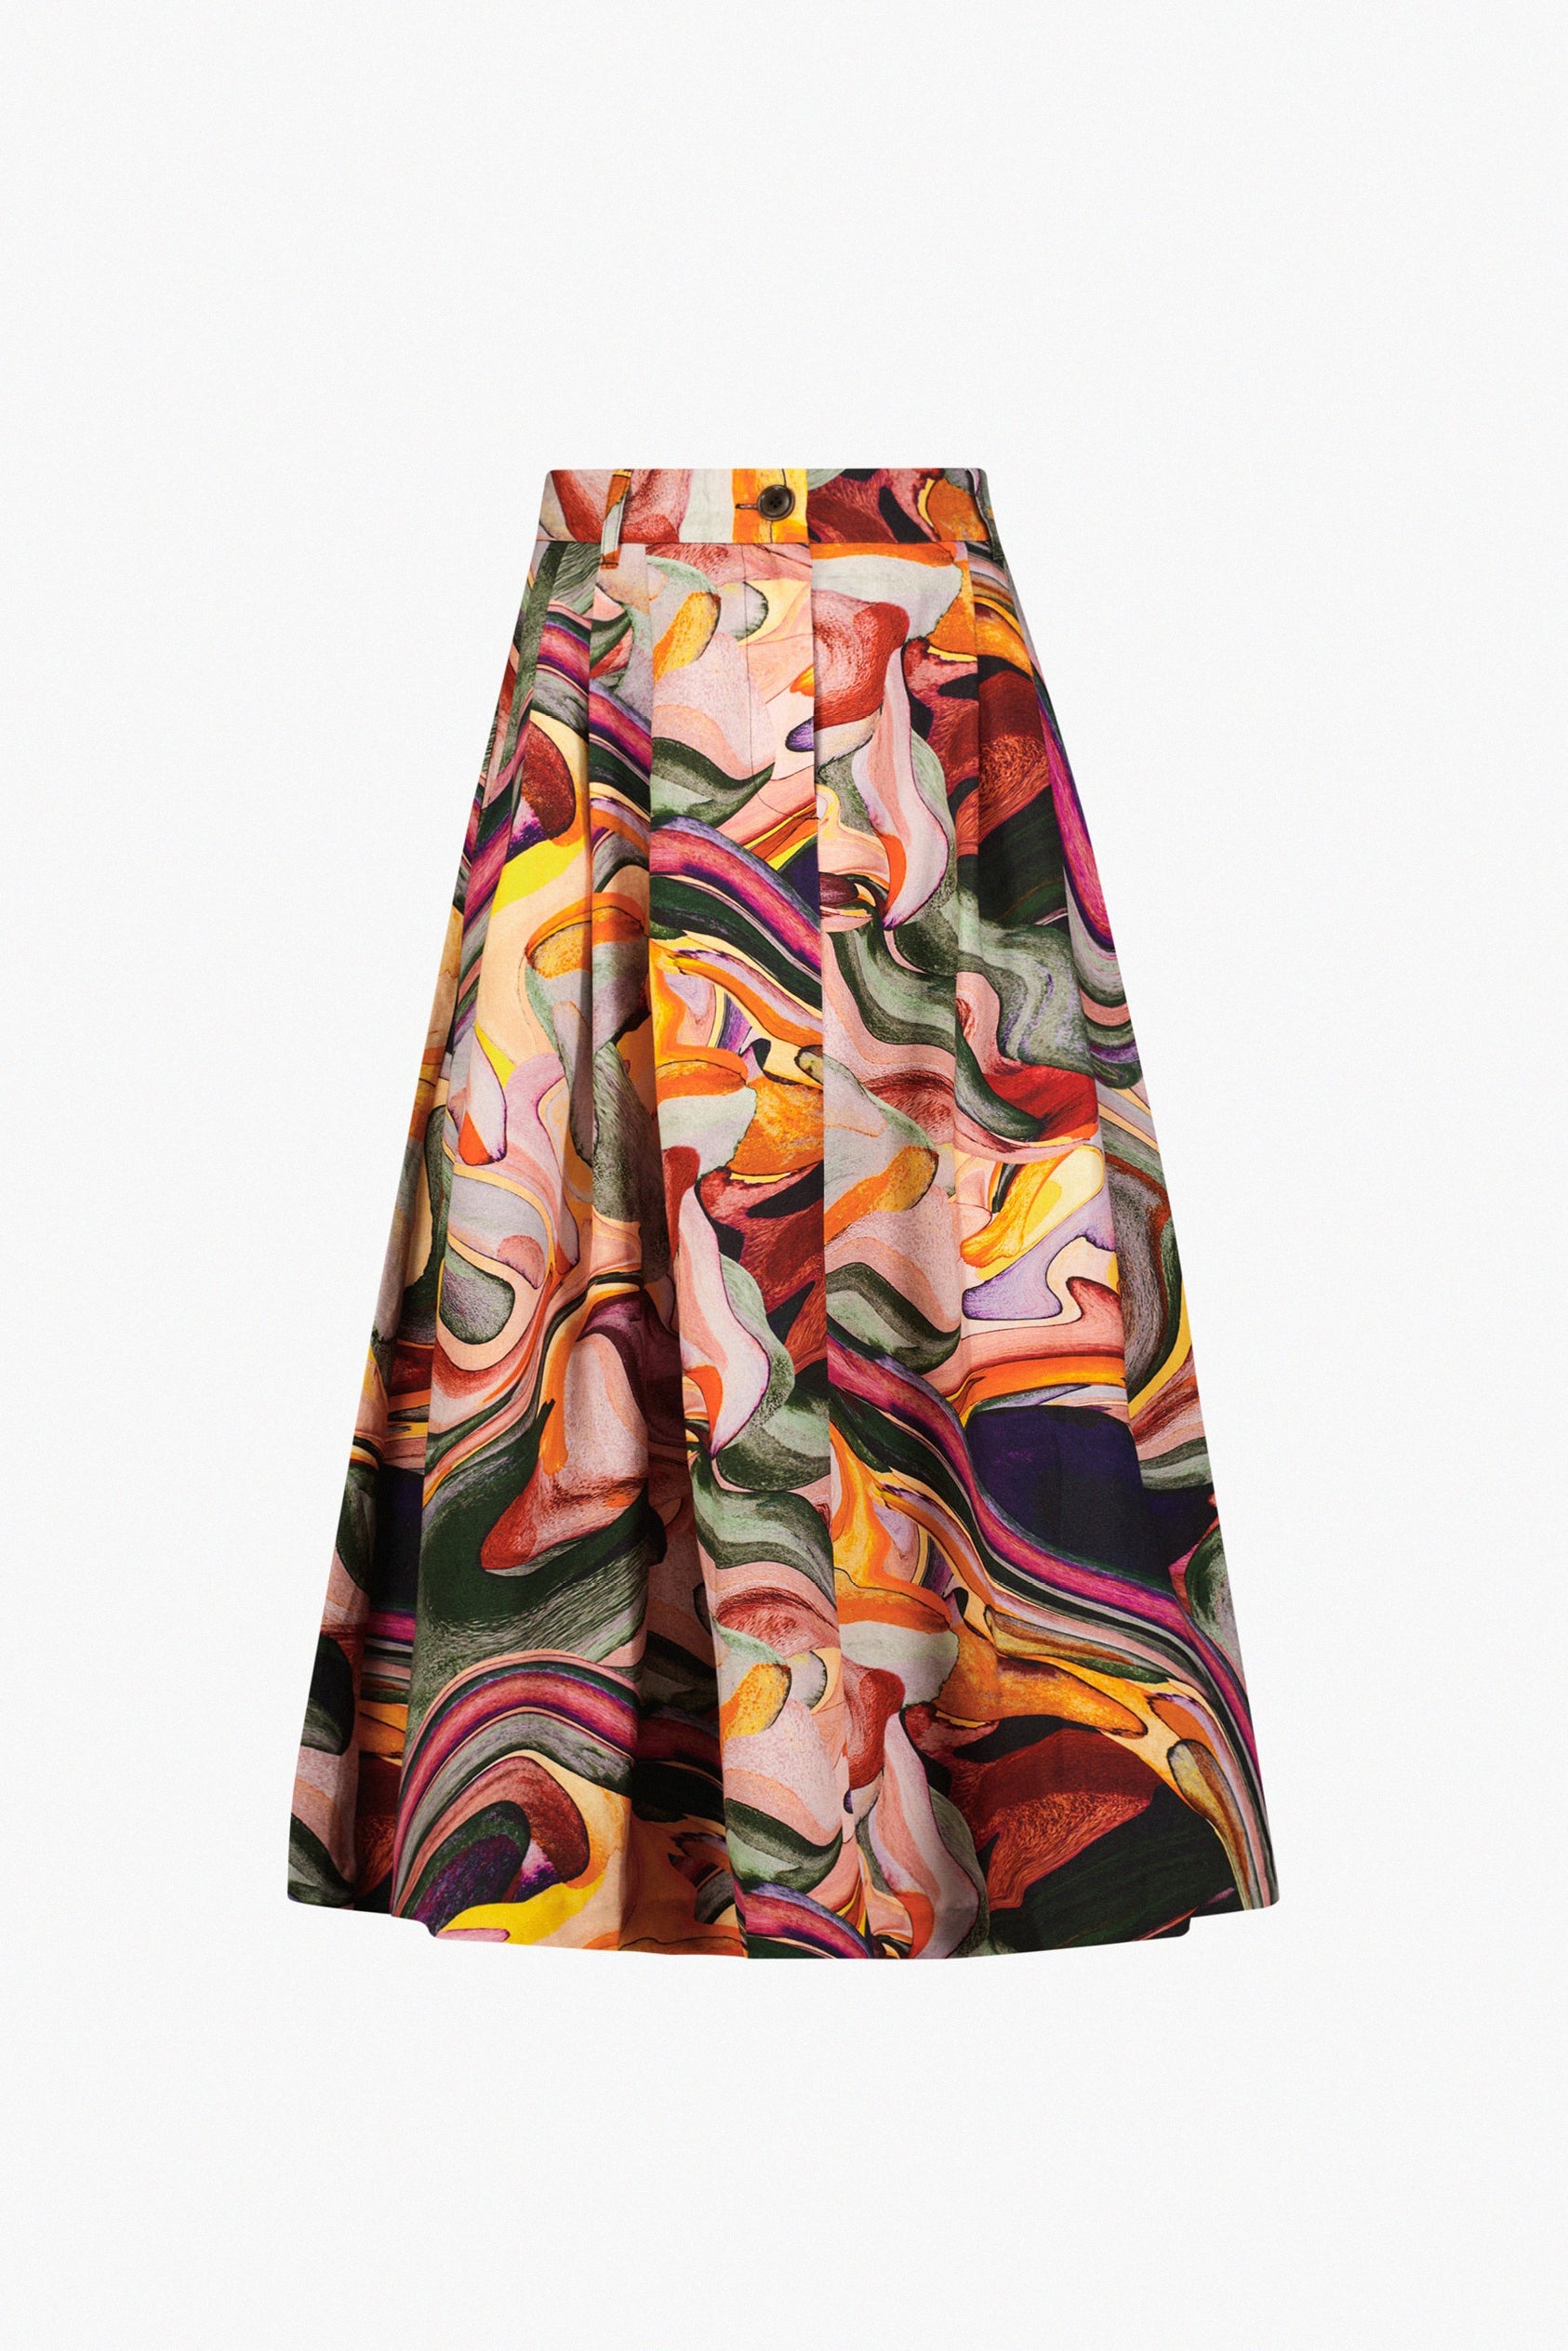 Tulay Skirt in Gemma by Mara Hoffman